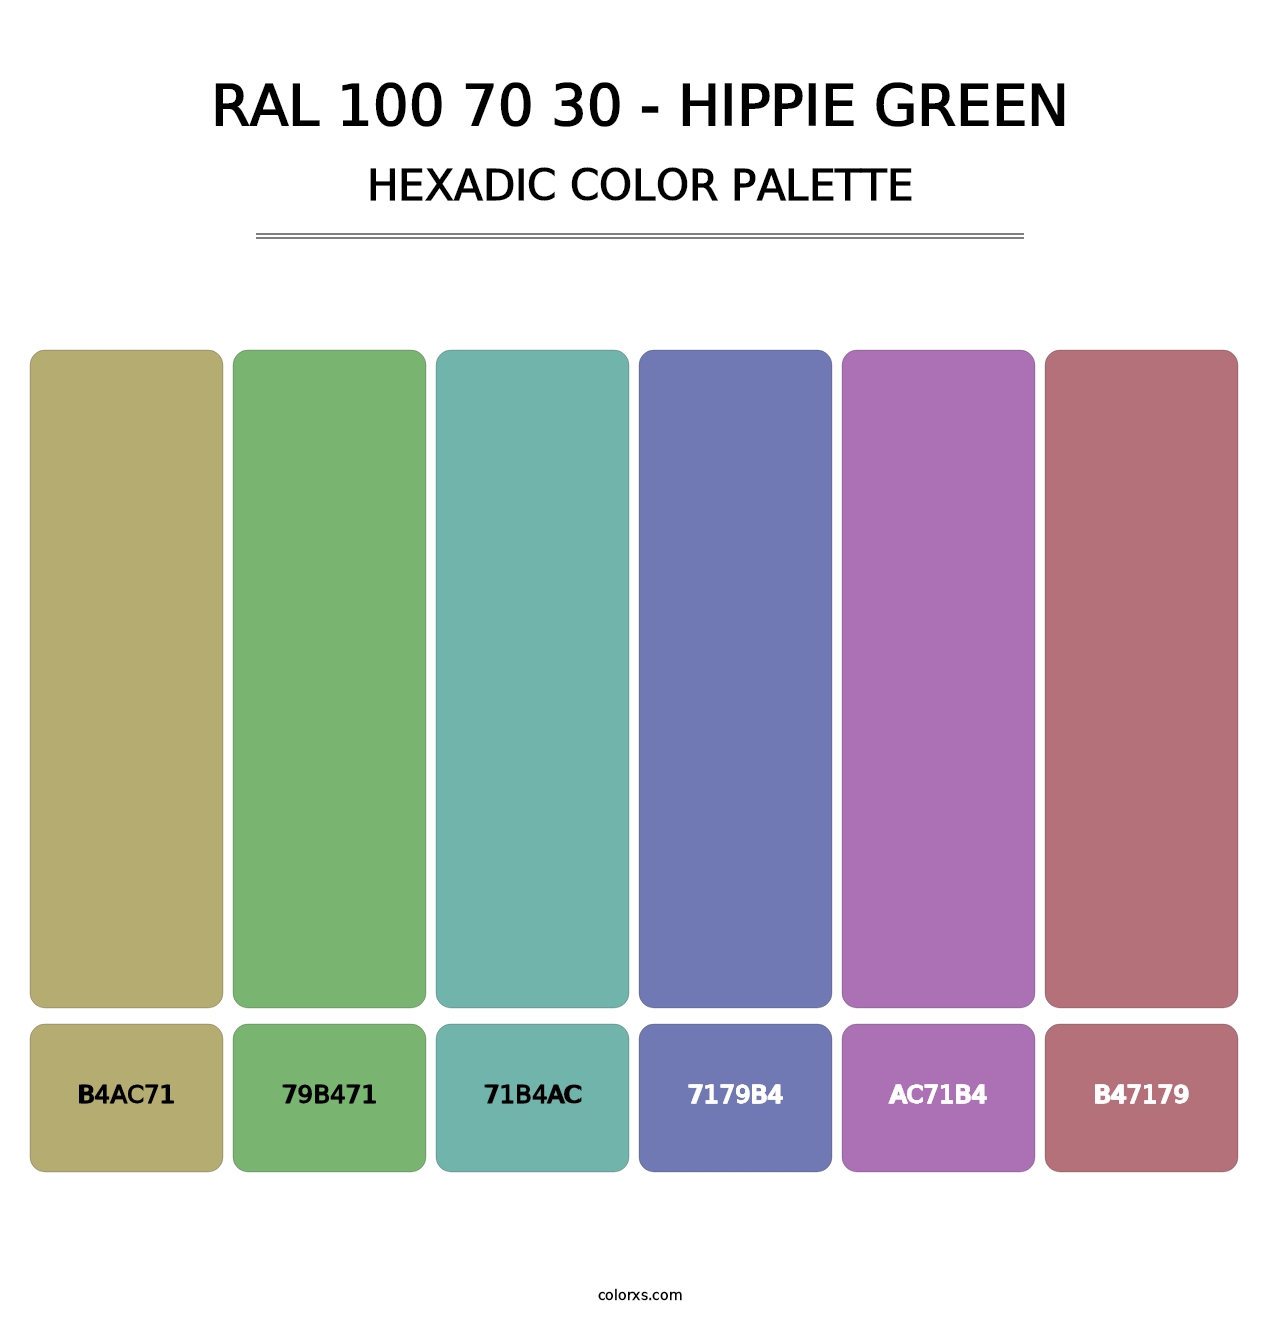 RAL 100 70 30 - Hippie Green - Hexadic Color Palette